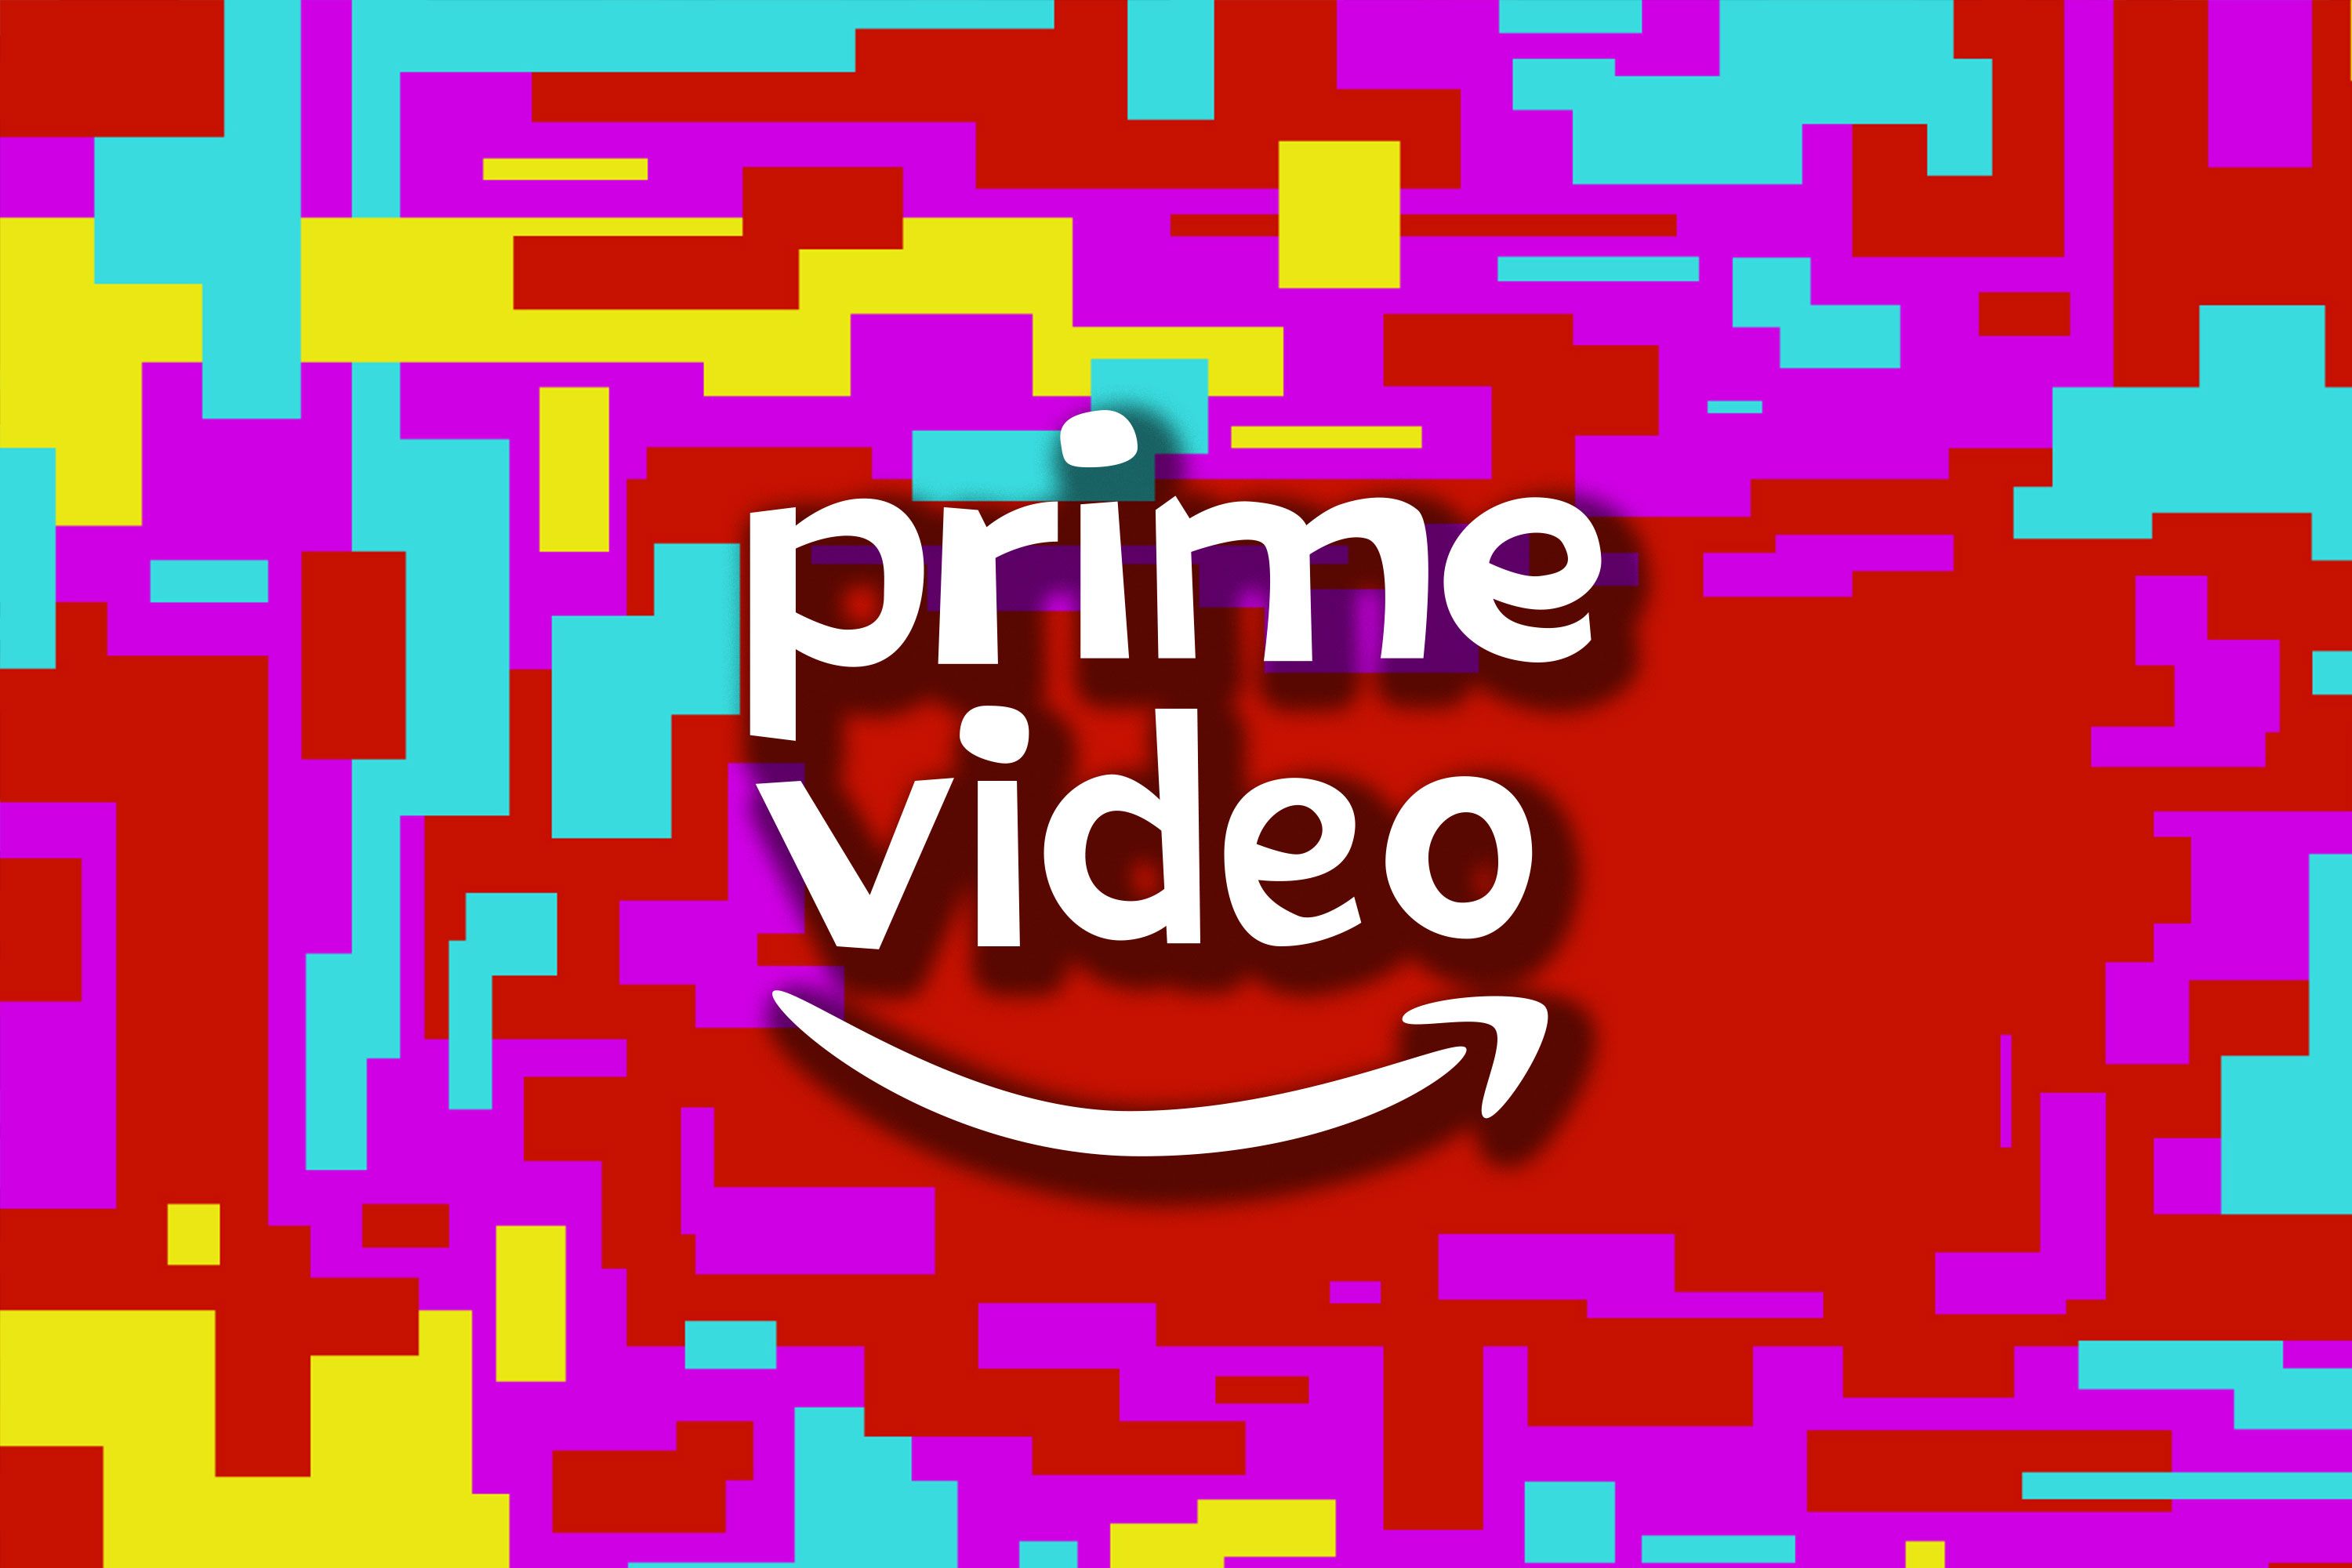 Prime Video: 10x10